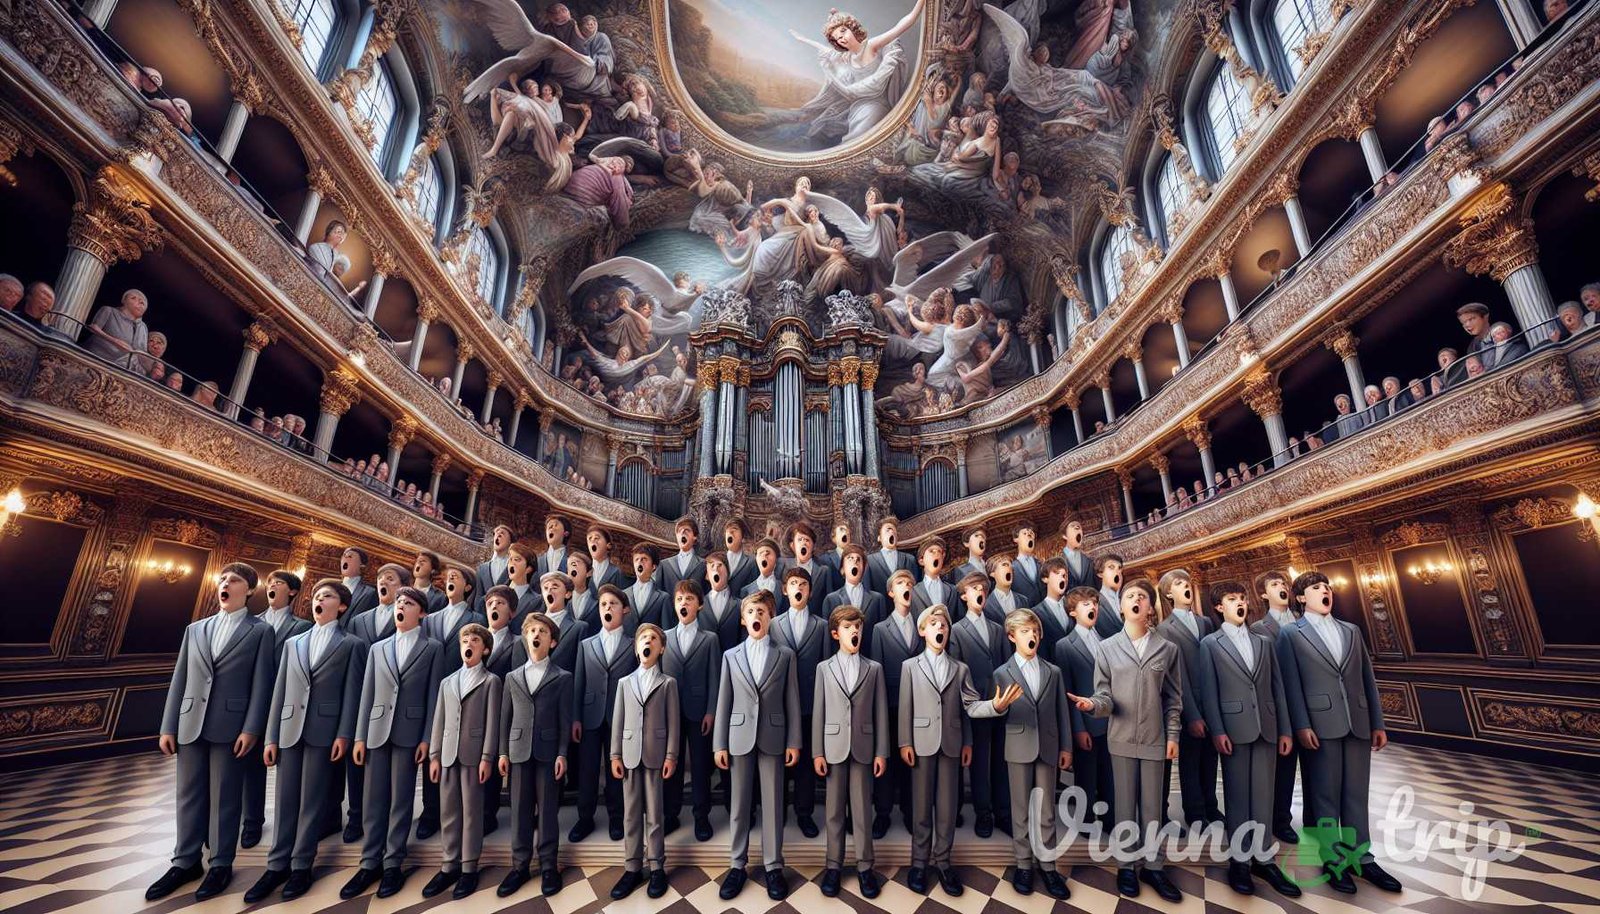 Illustration for section: Vienna Boys' Choir: Dating back over 500 years, the Vienna Boys' Choir is a true Viennese institutio - vienna harmonies